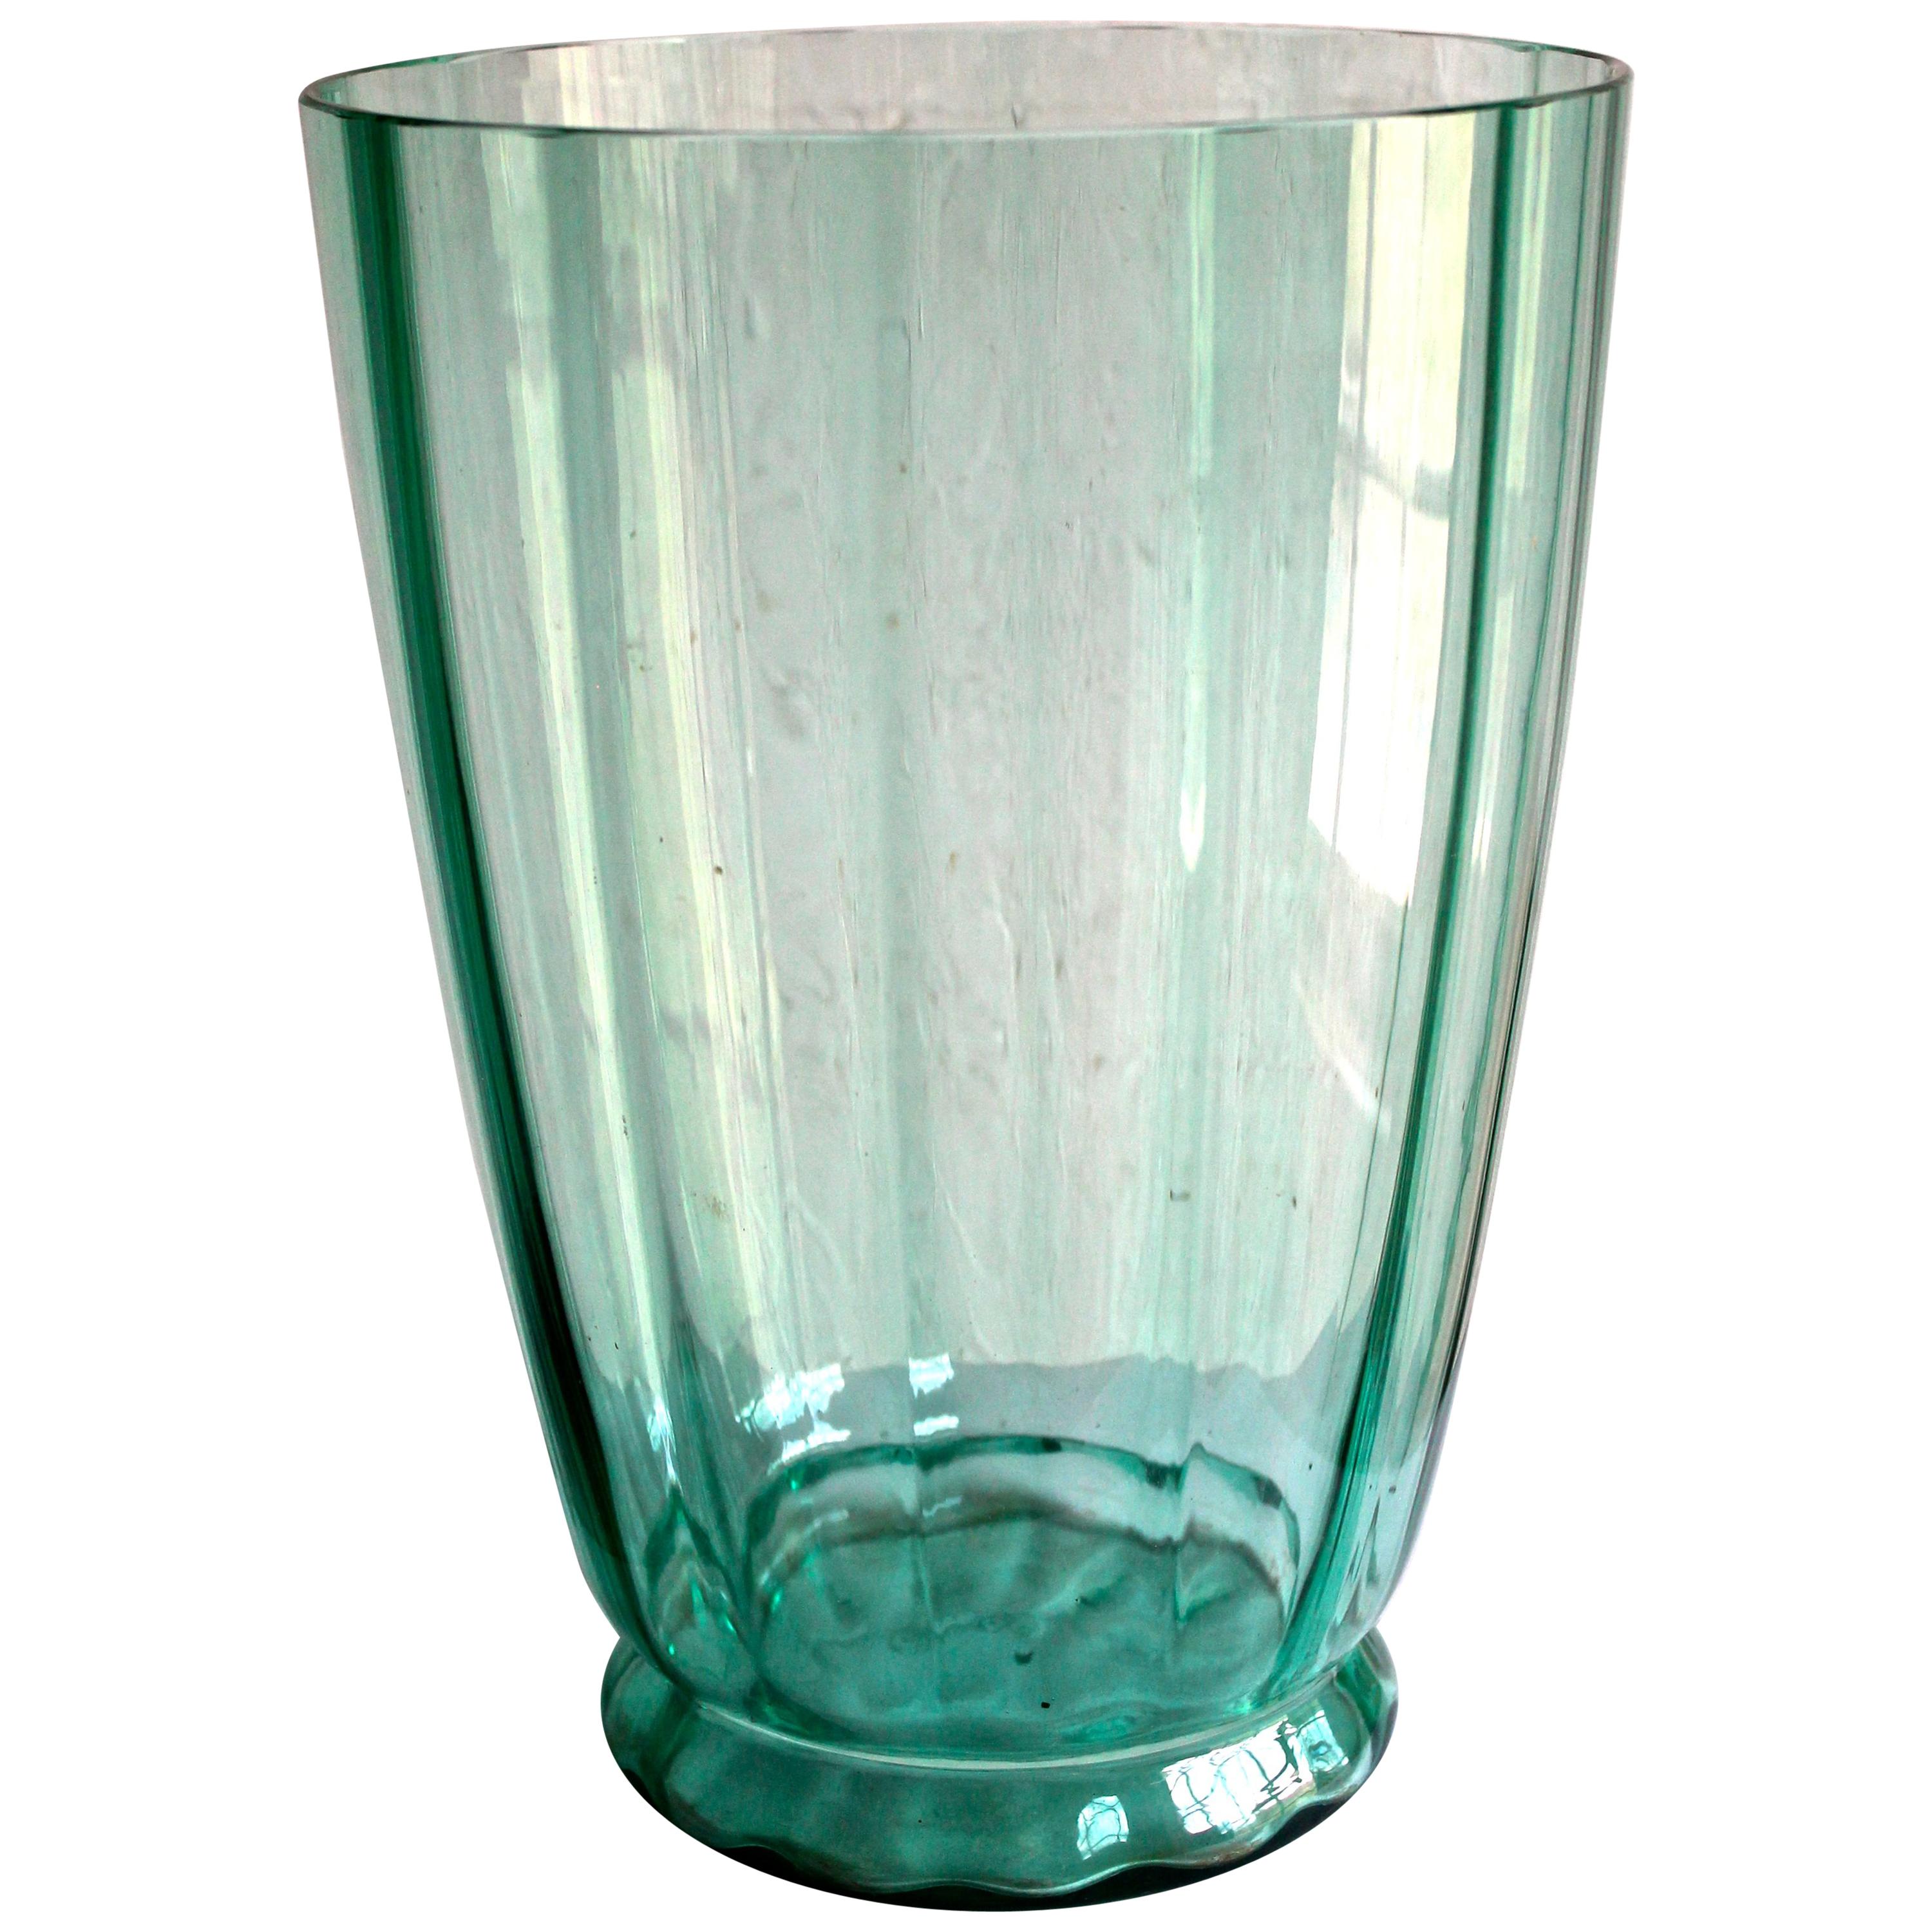 Glasfriek Leerdam A.D. Copier Large Green Glass Vase